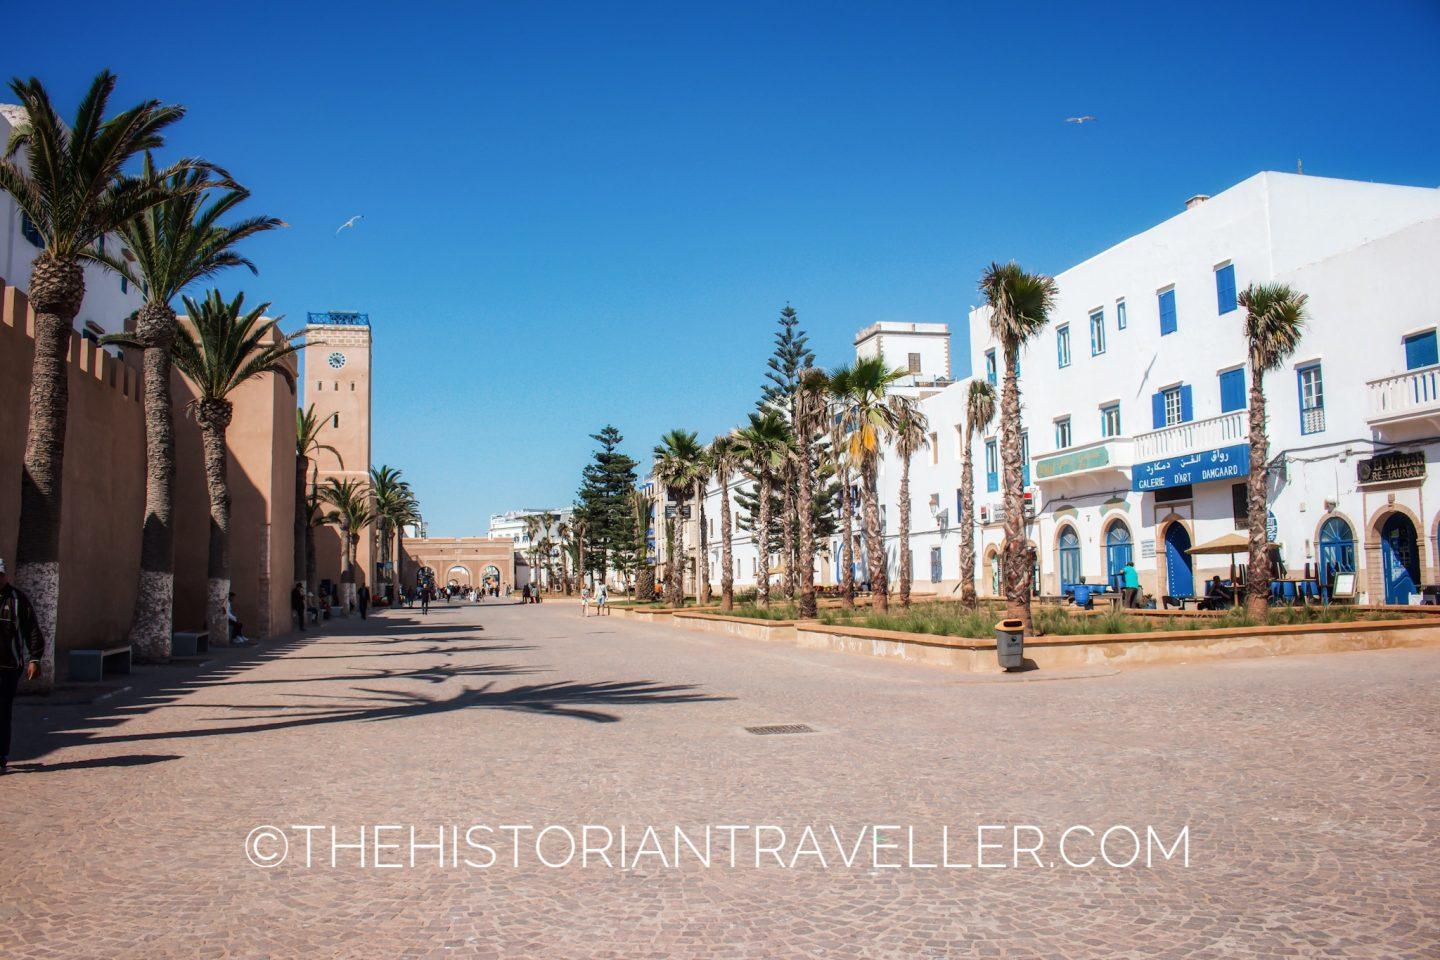 Day trip to Essaouira - View of the medina near the Clock Tower